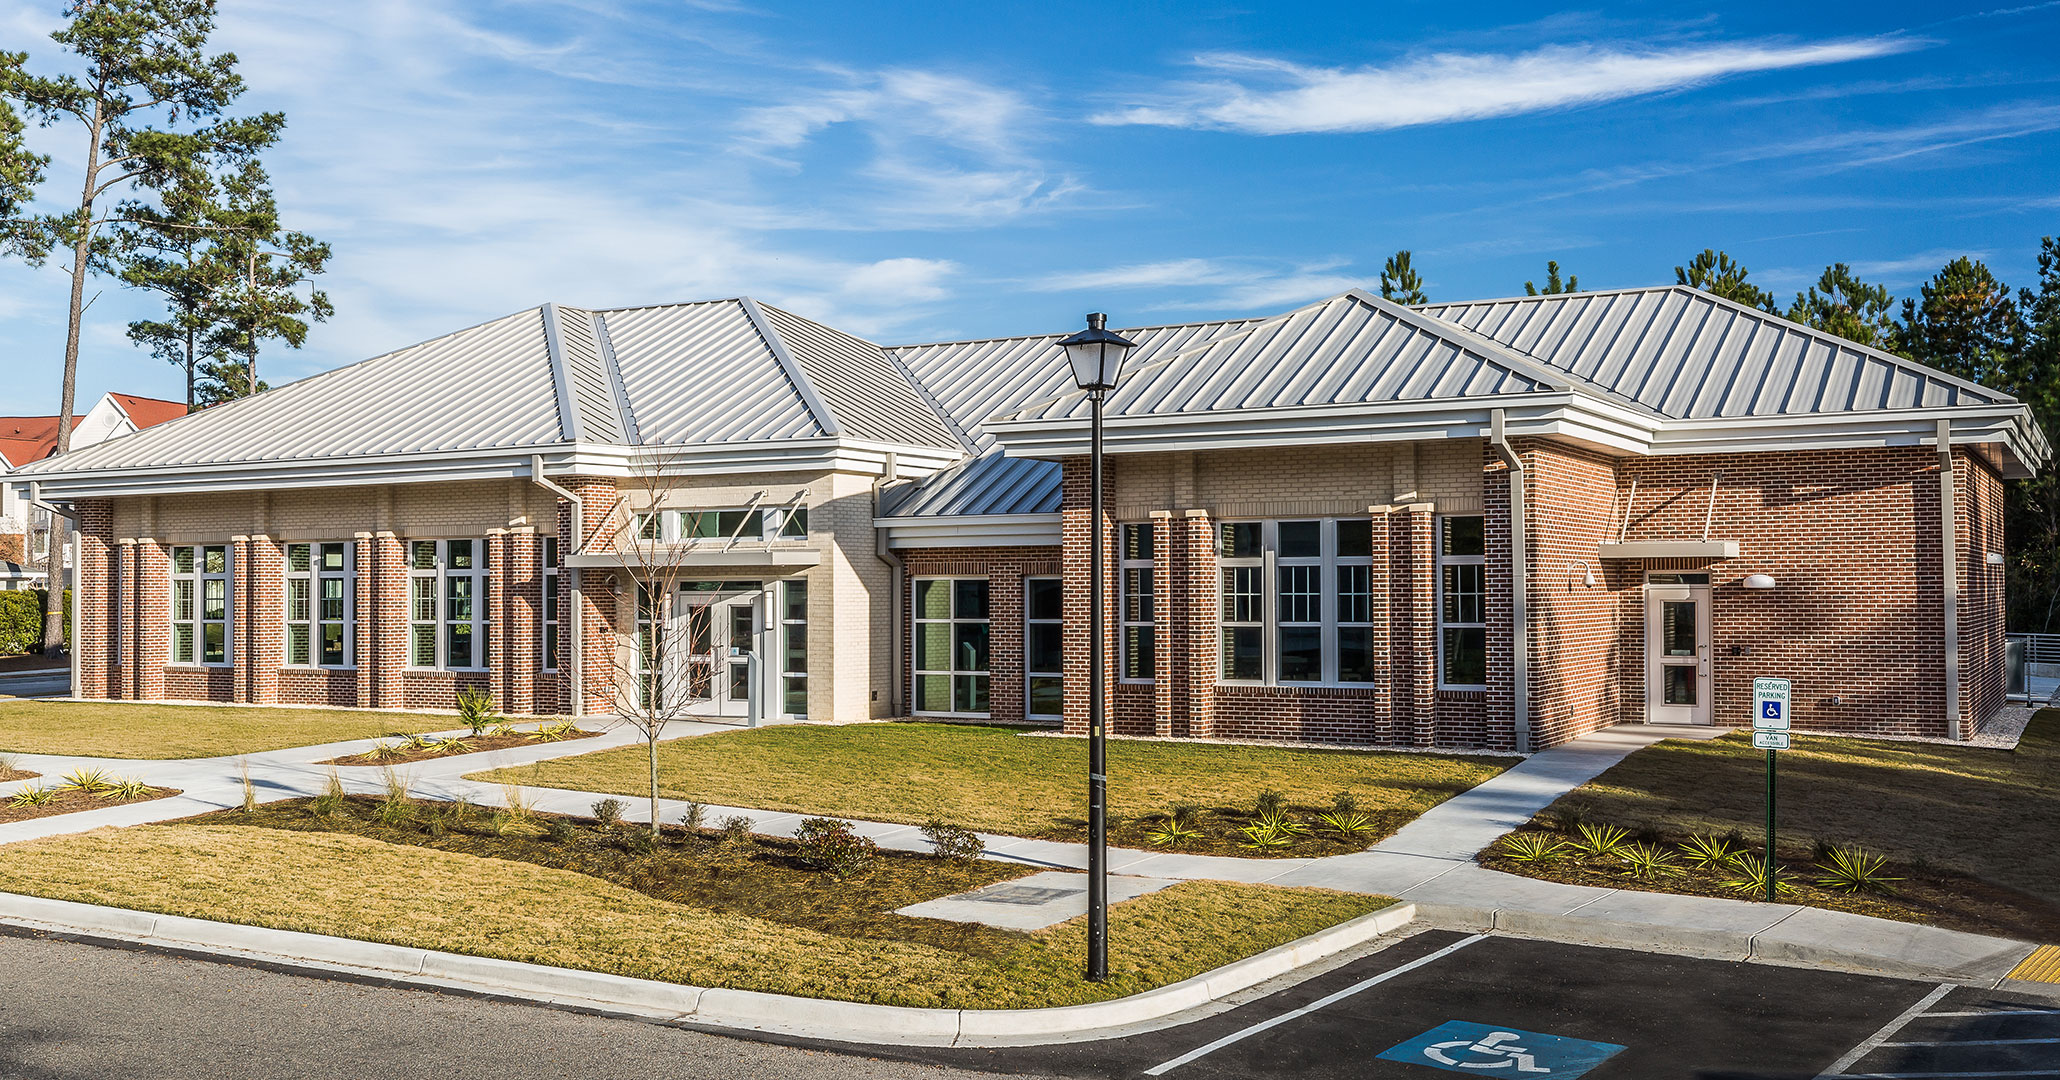 Coastal Carolina University built the new University Dining Hall working with Boudreaux architects from Columbia, SC.